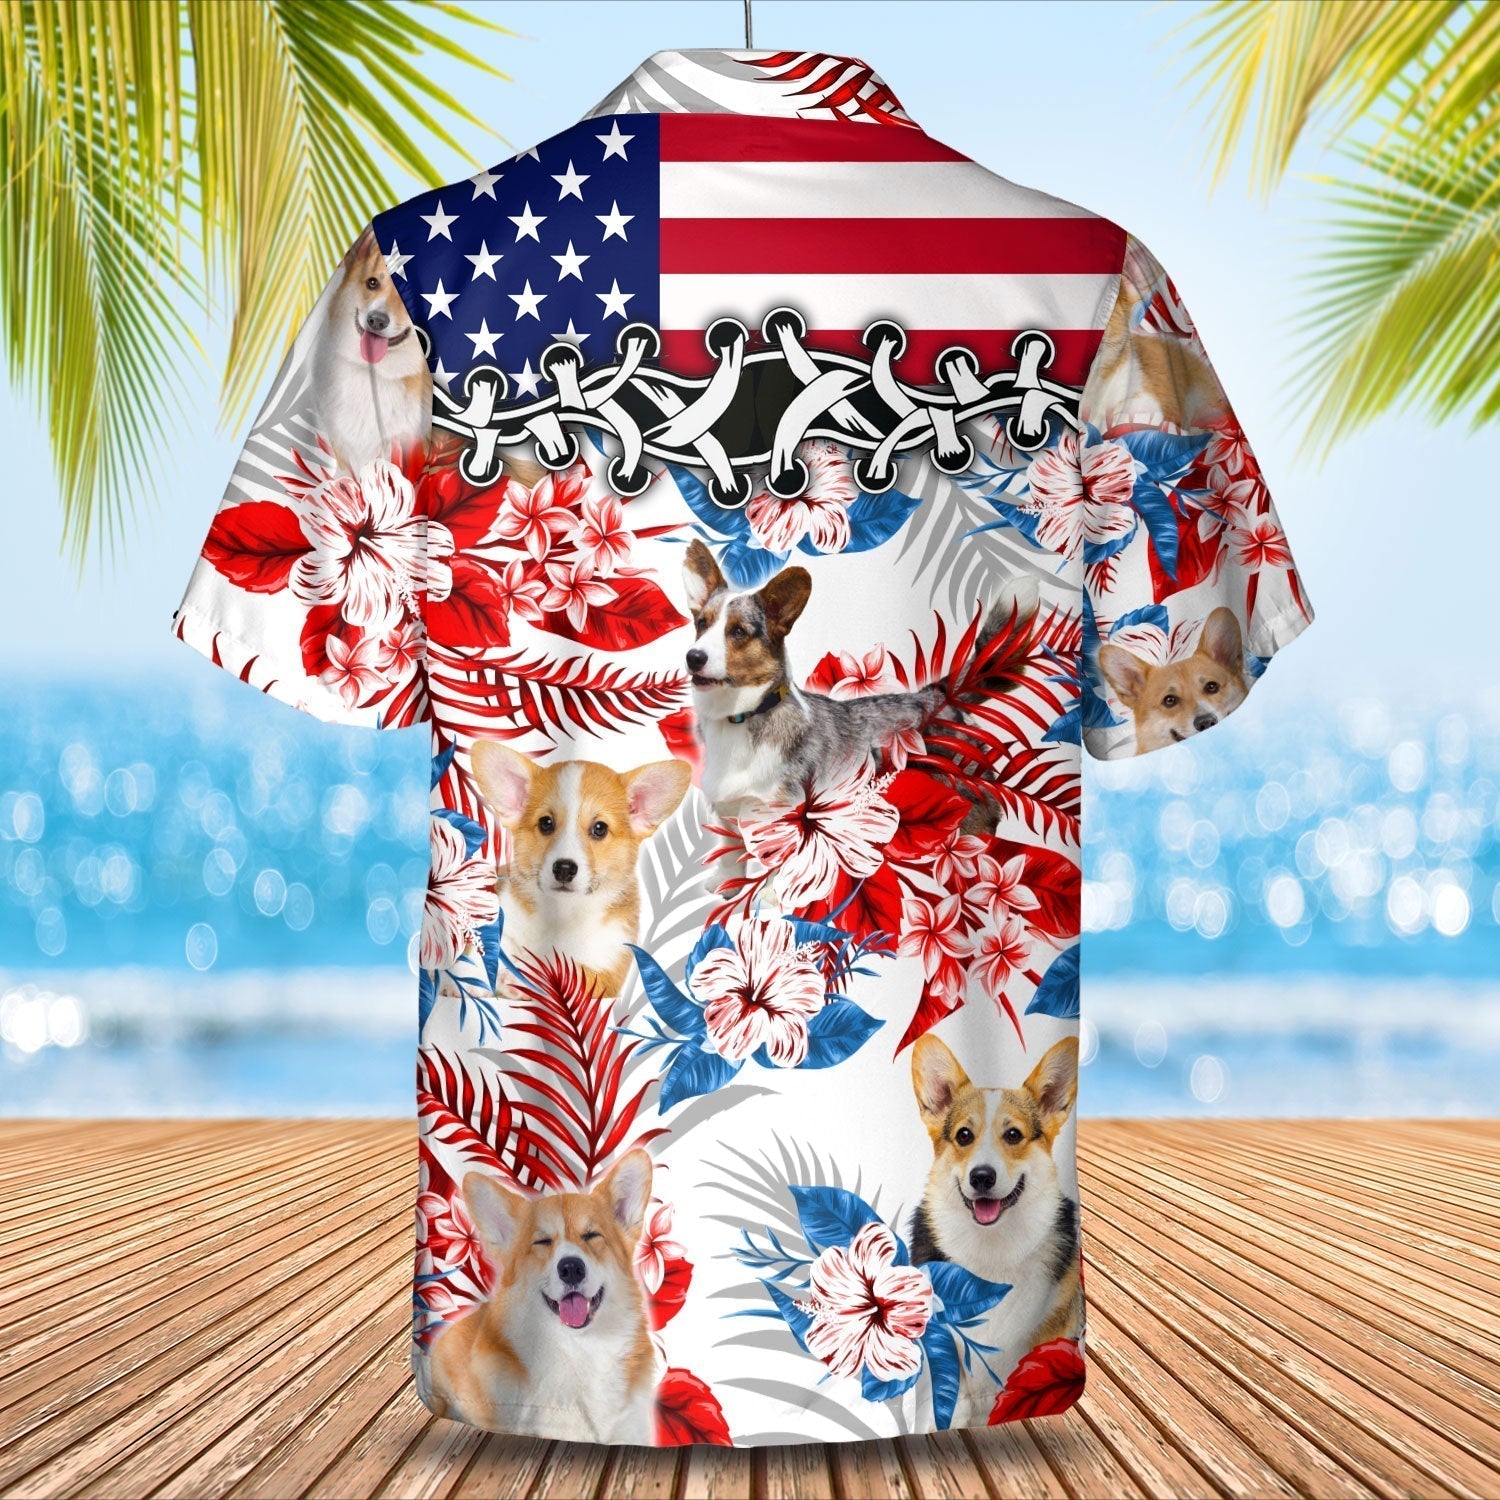 Welsh Corgi Hawaiian Shirt - Gift for Summer/ Summer aloha shirt/ Hawaiian shirt for Men and women